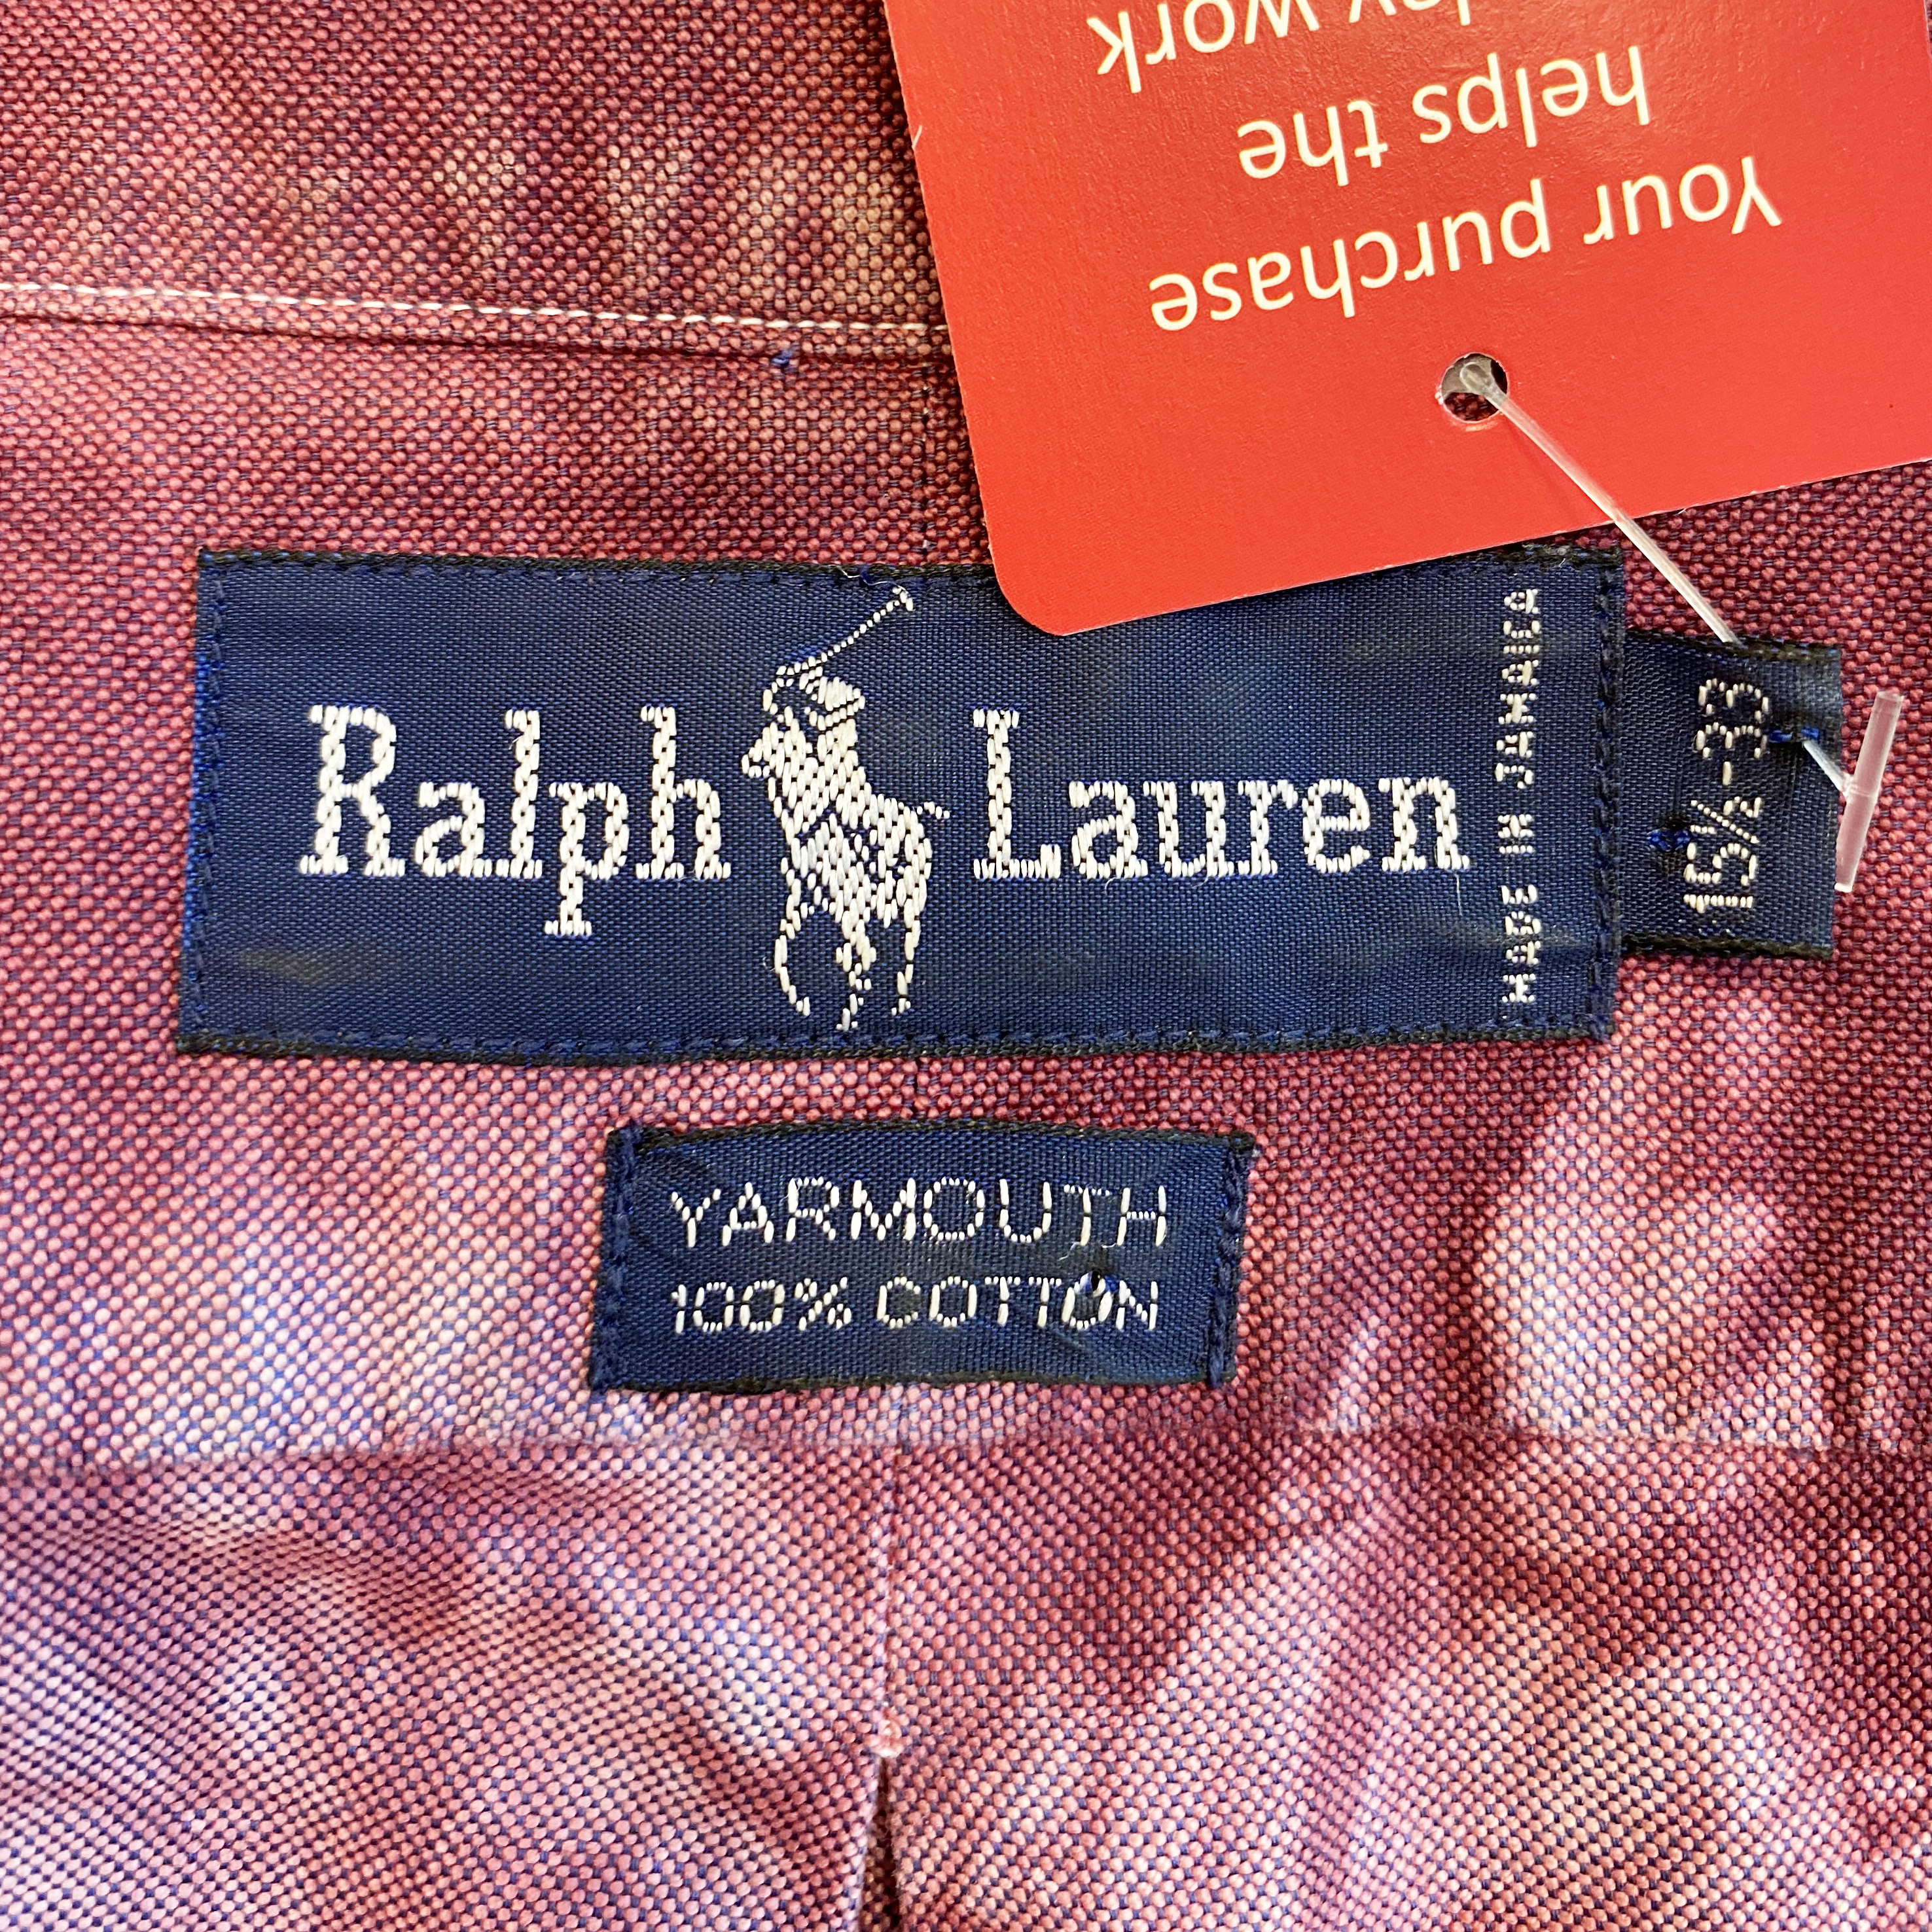 Ralph Lauren Tie-Dyed Effect Maroon Short-Sleeved Shirt